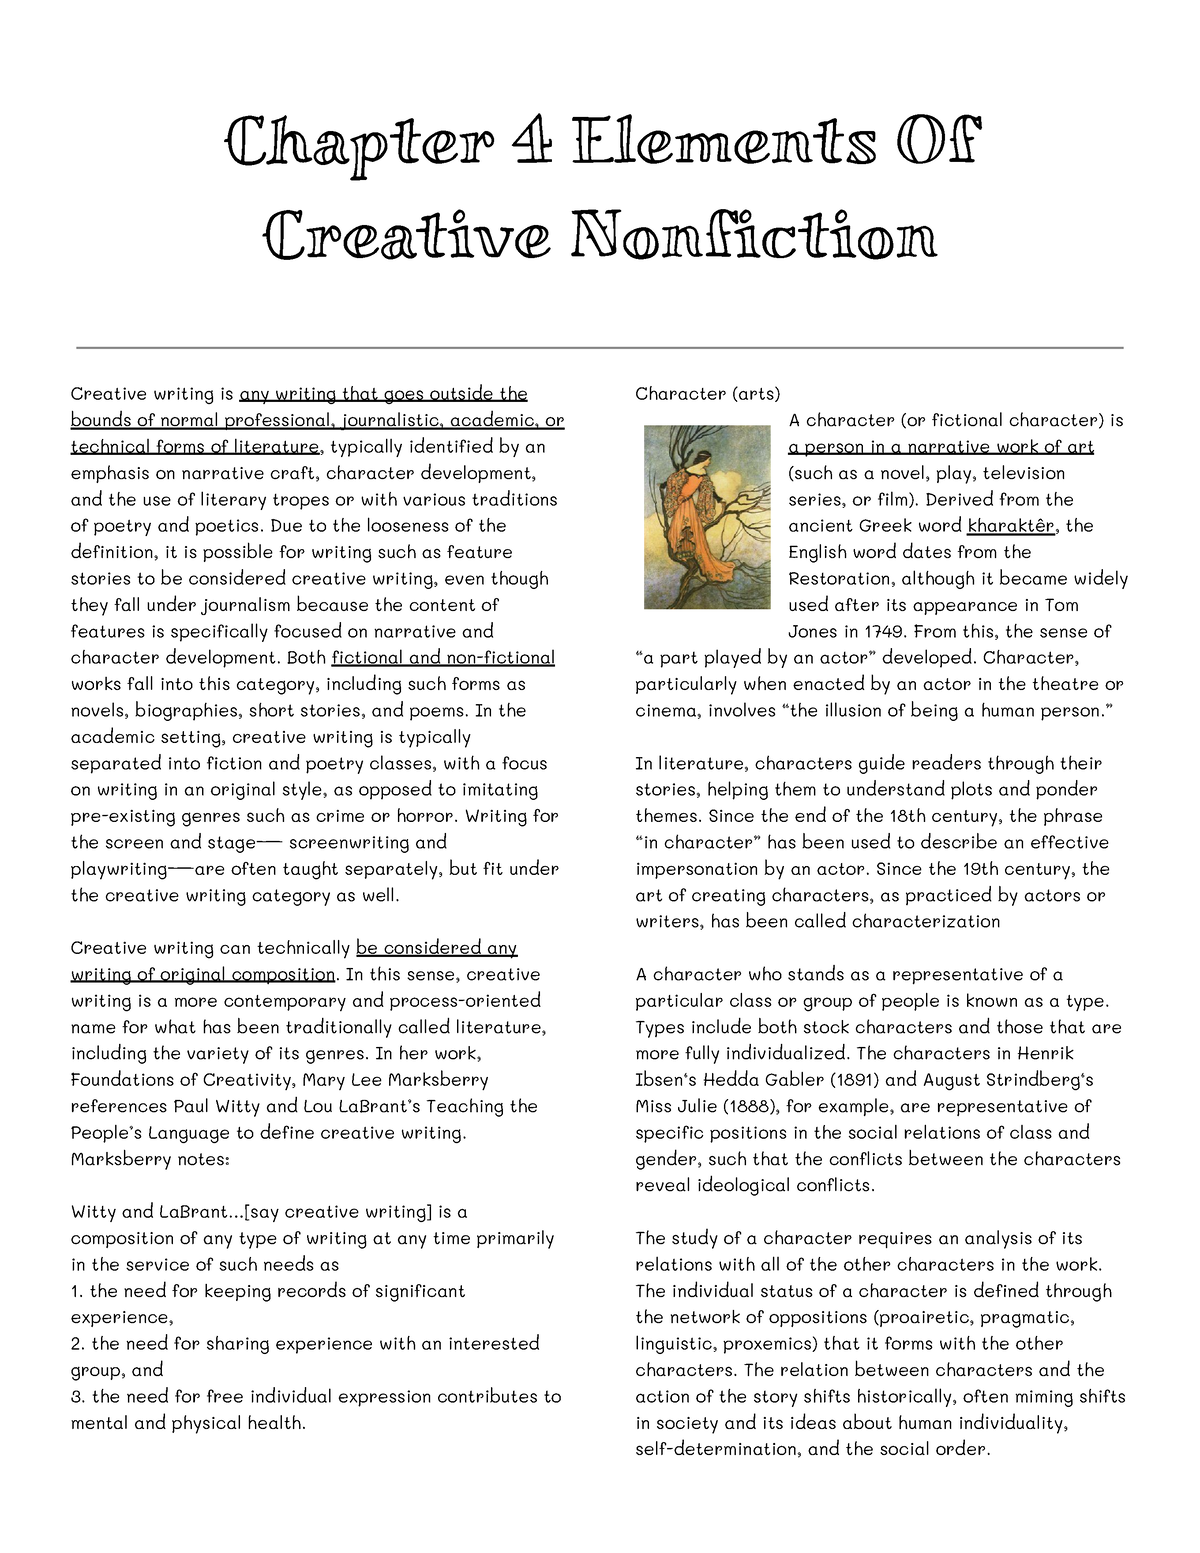 creative nonfiction essay